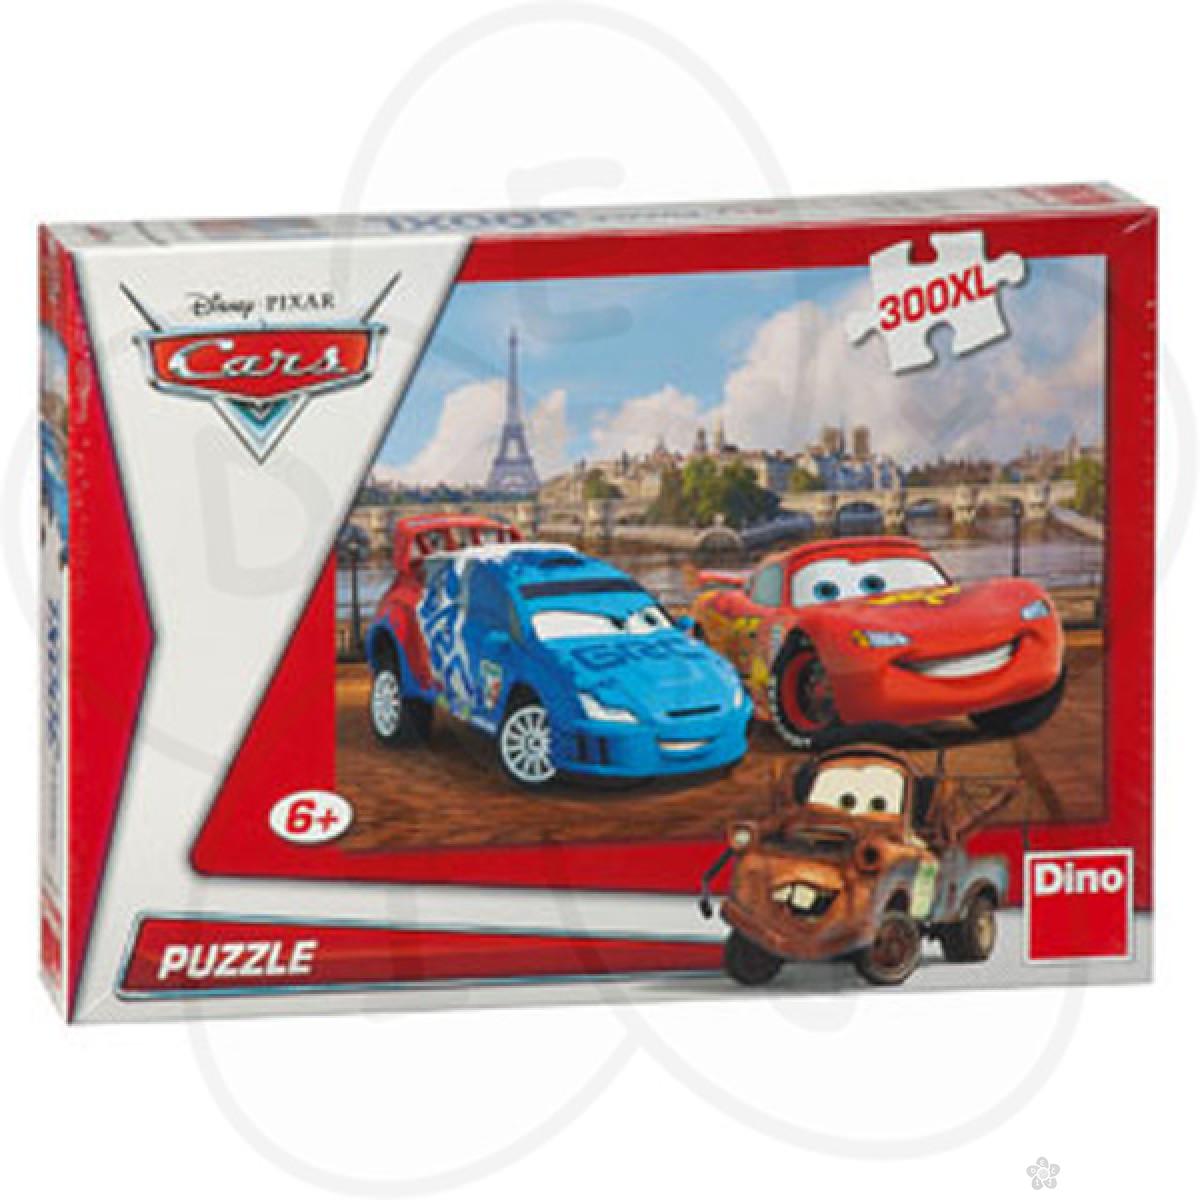 Puzzle za decu Disney Cars 300XL, D472037 